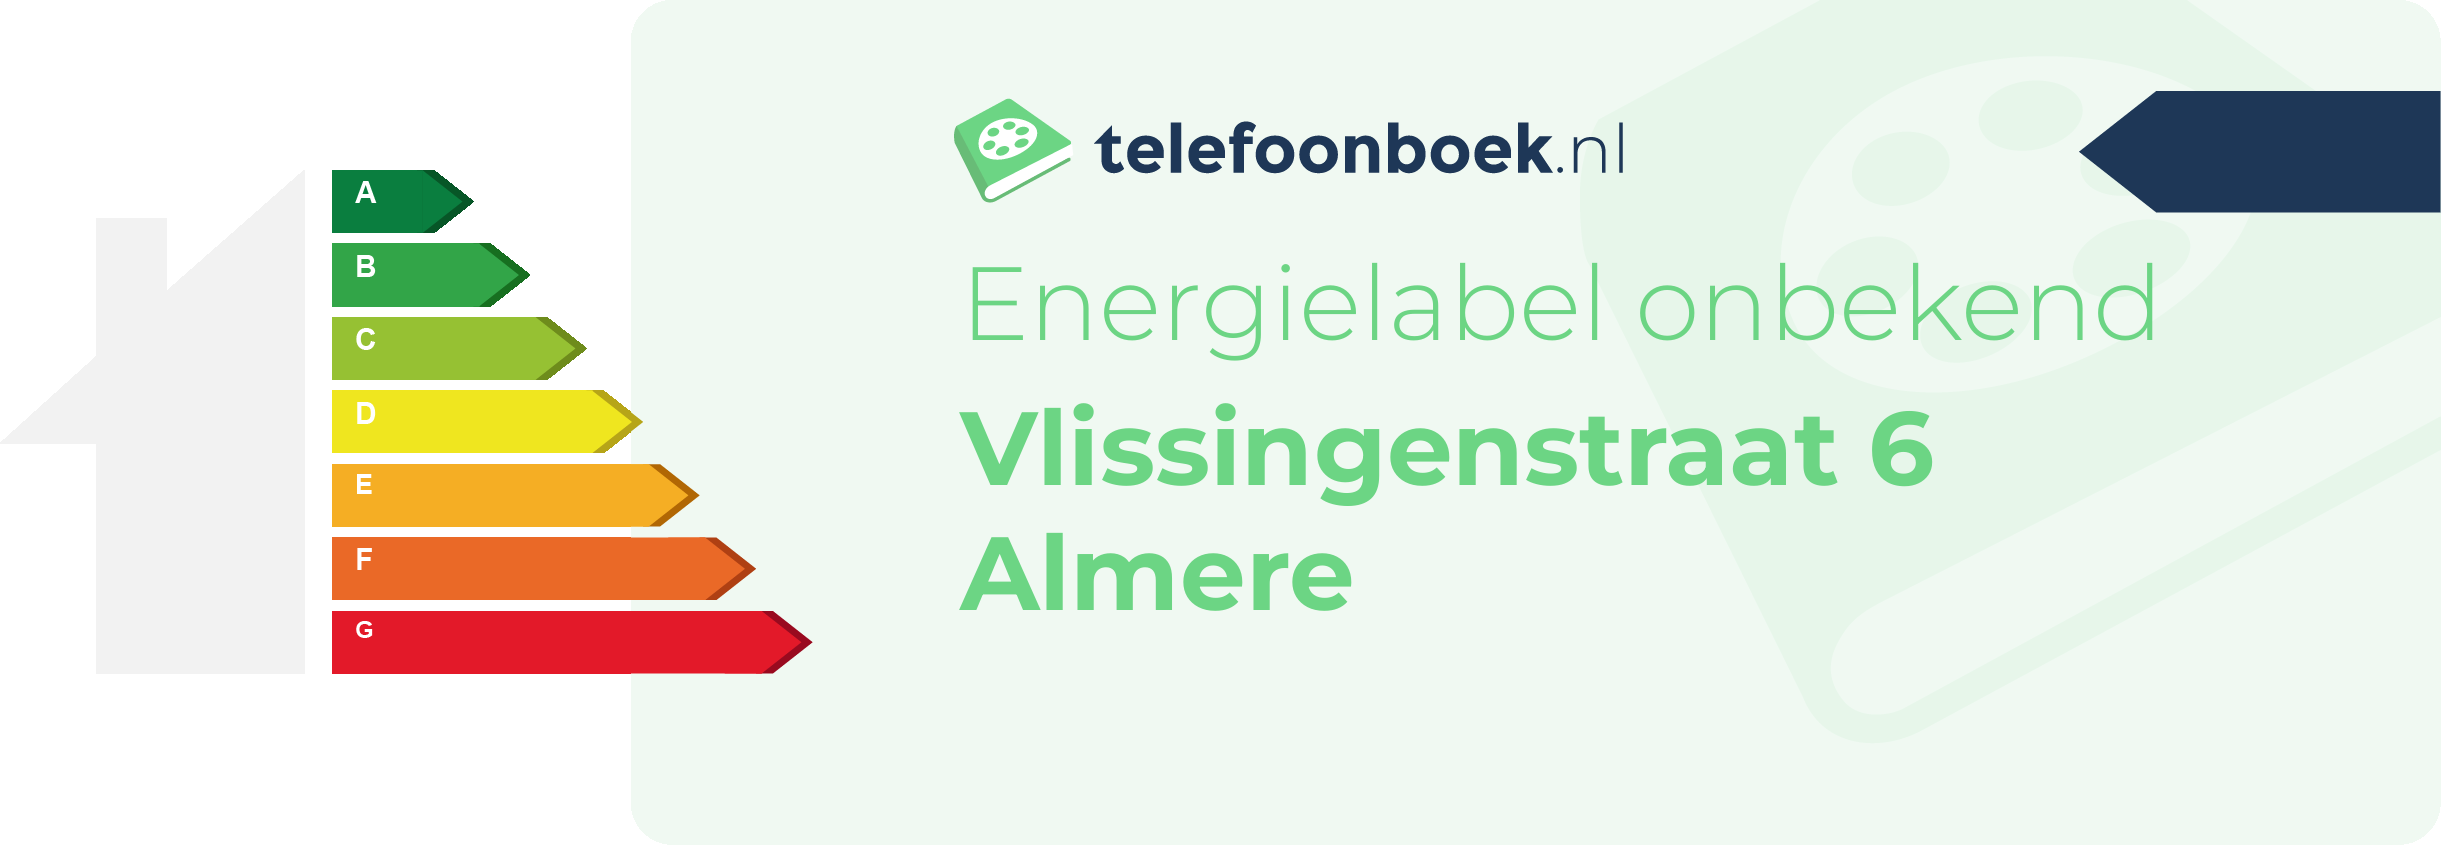 Energielabel Vlissingenstraat 6 Almere